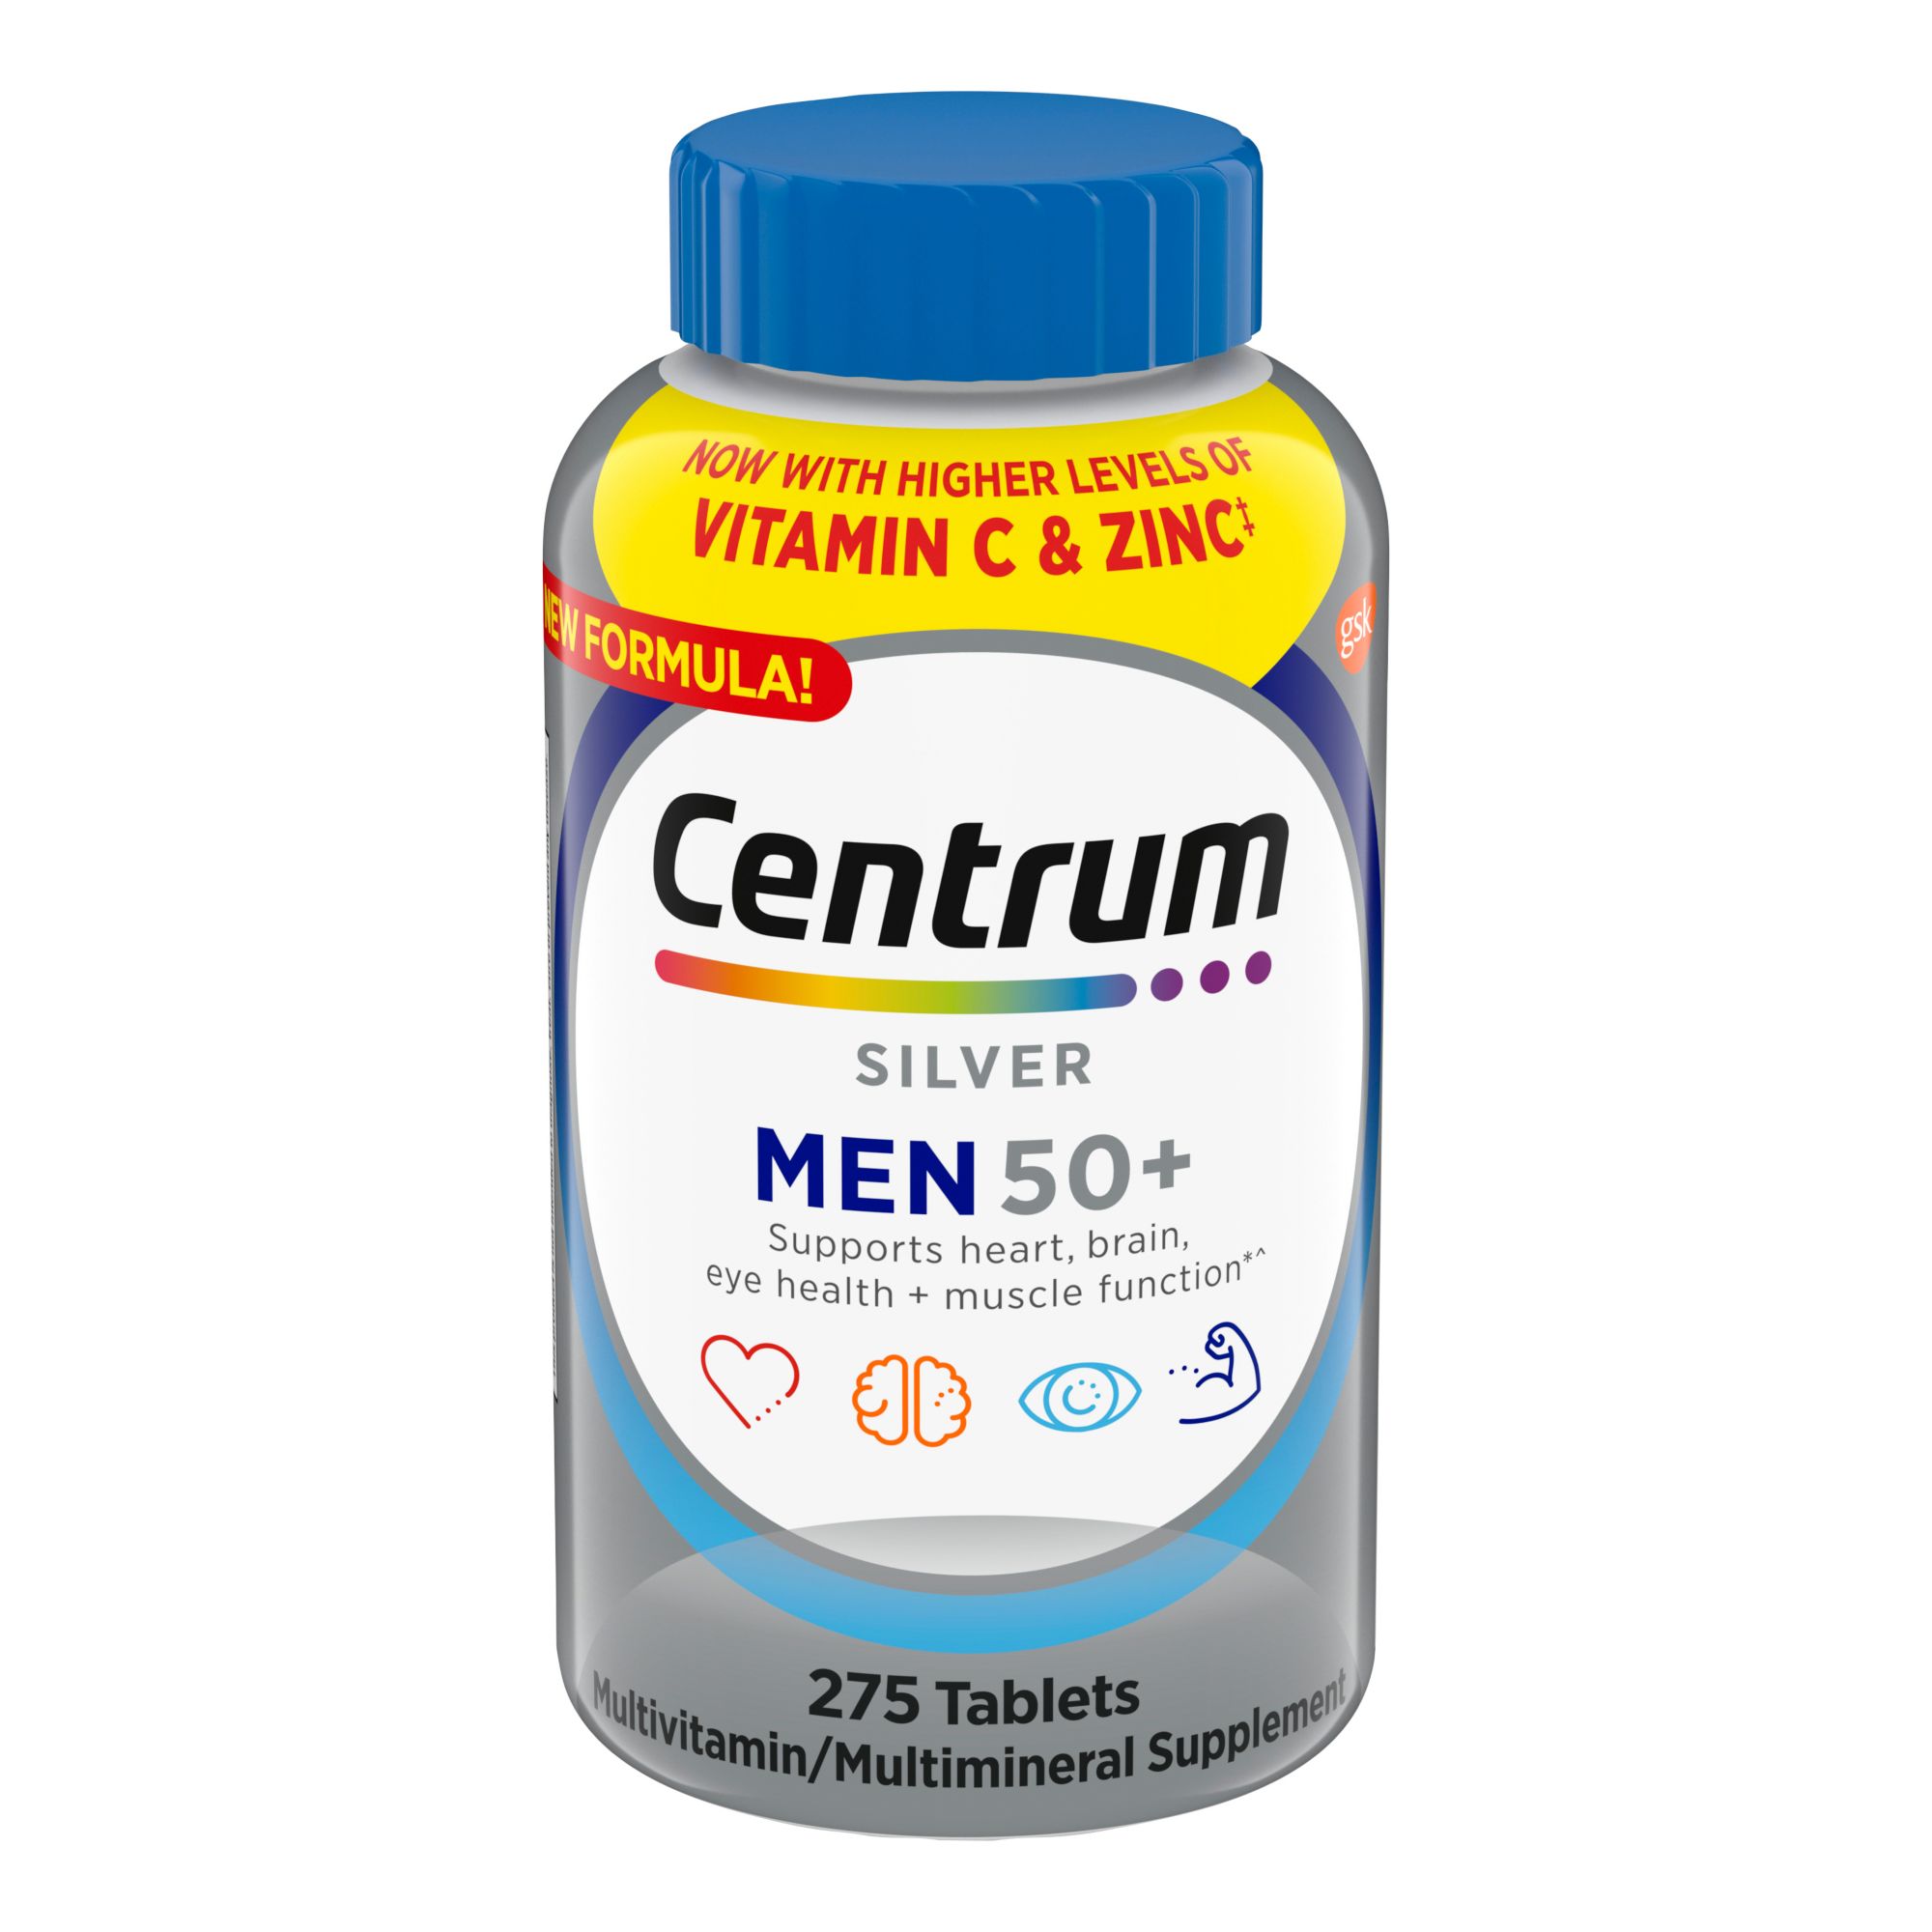 Centrum Silver Men's Multivitamin and Multimineral Supplement Tablets ...